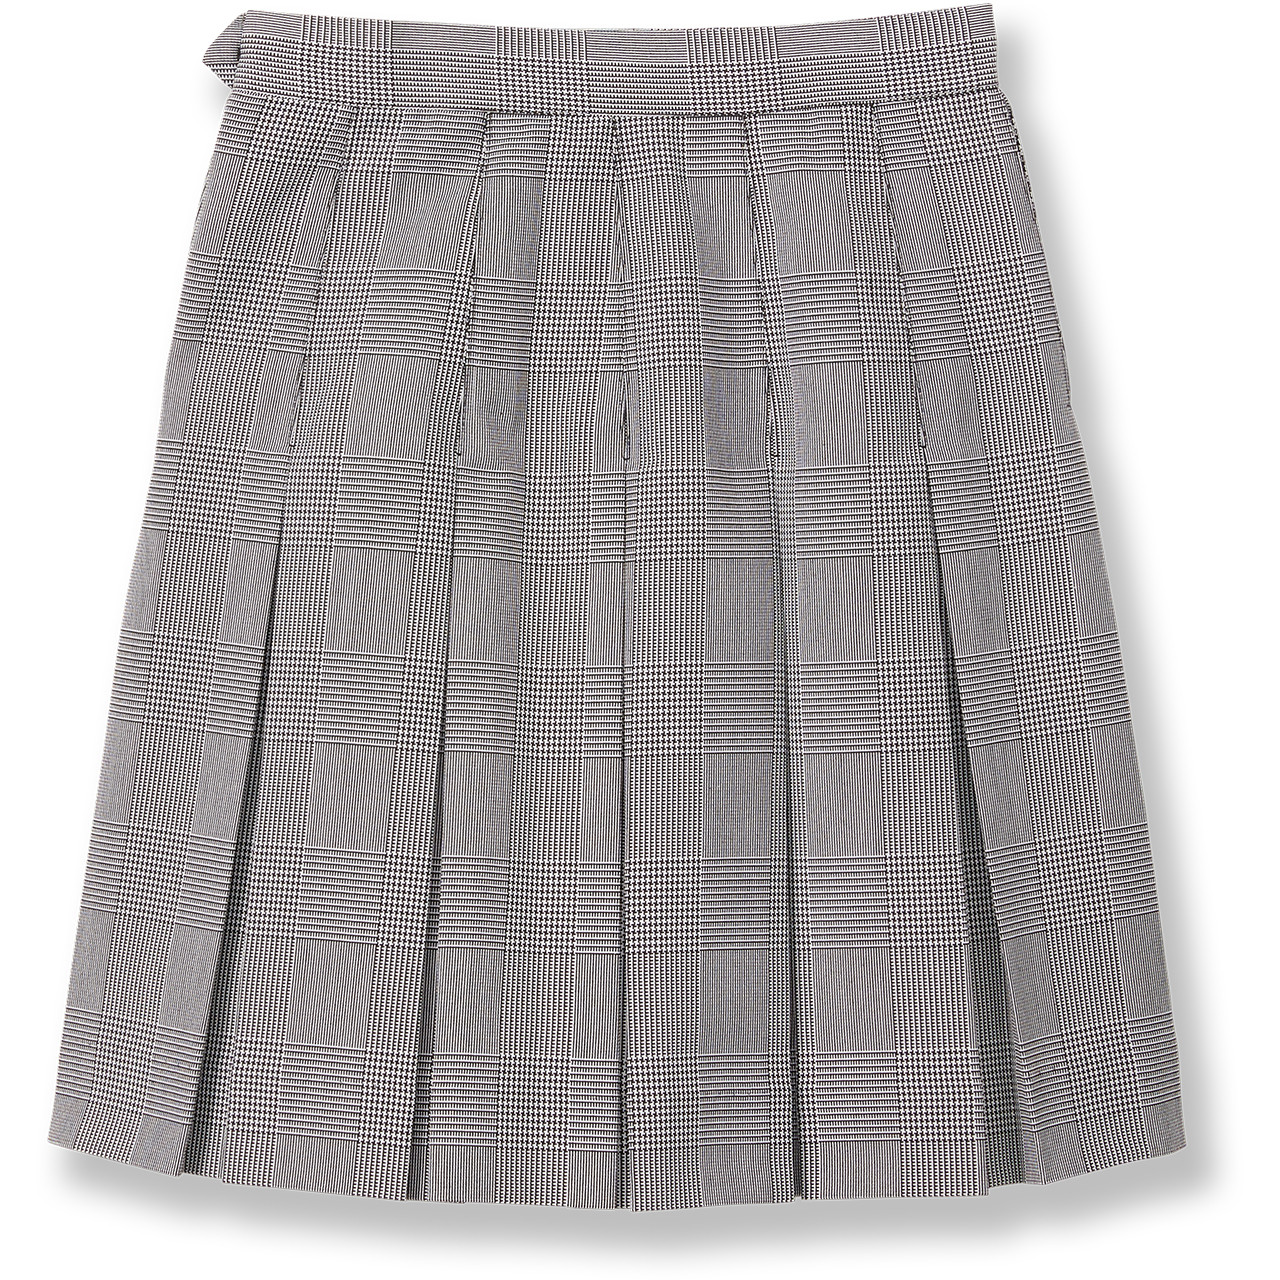 Box Pleat Elastic Skirt